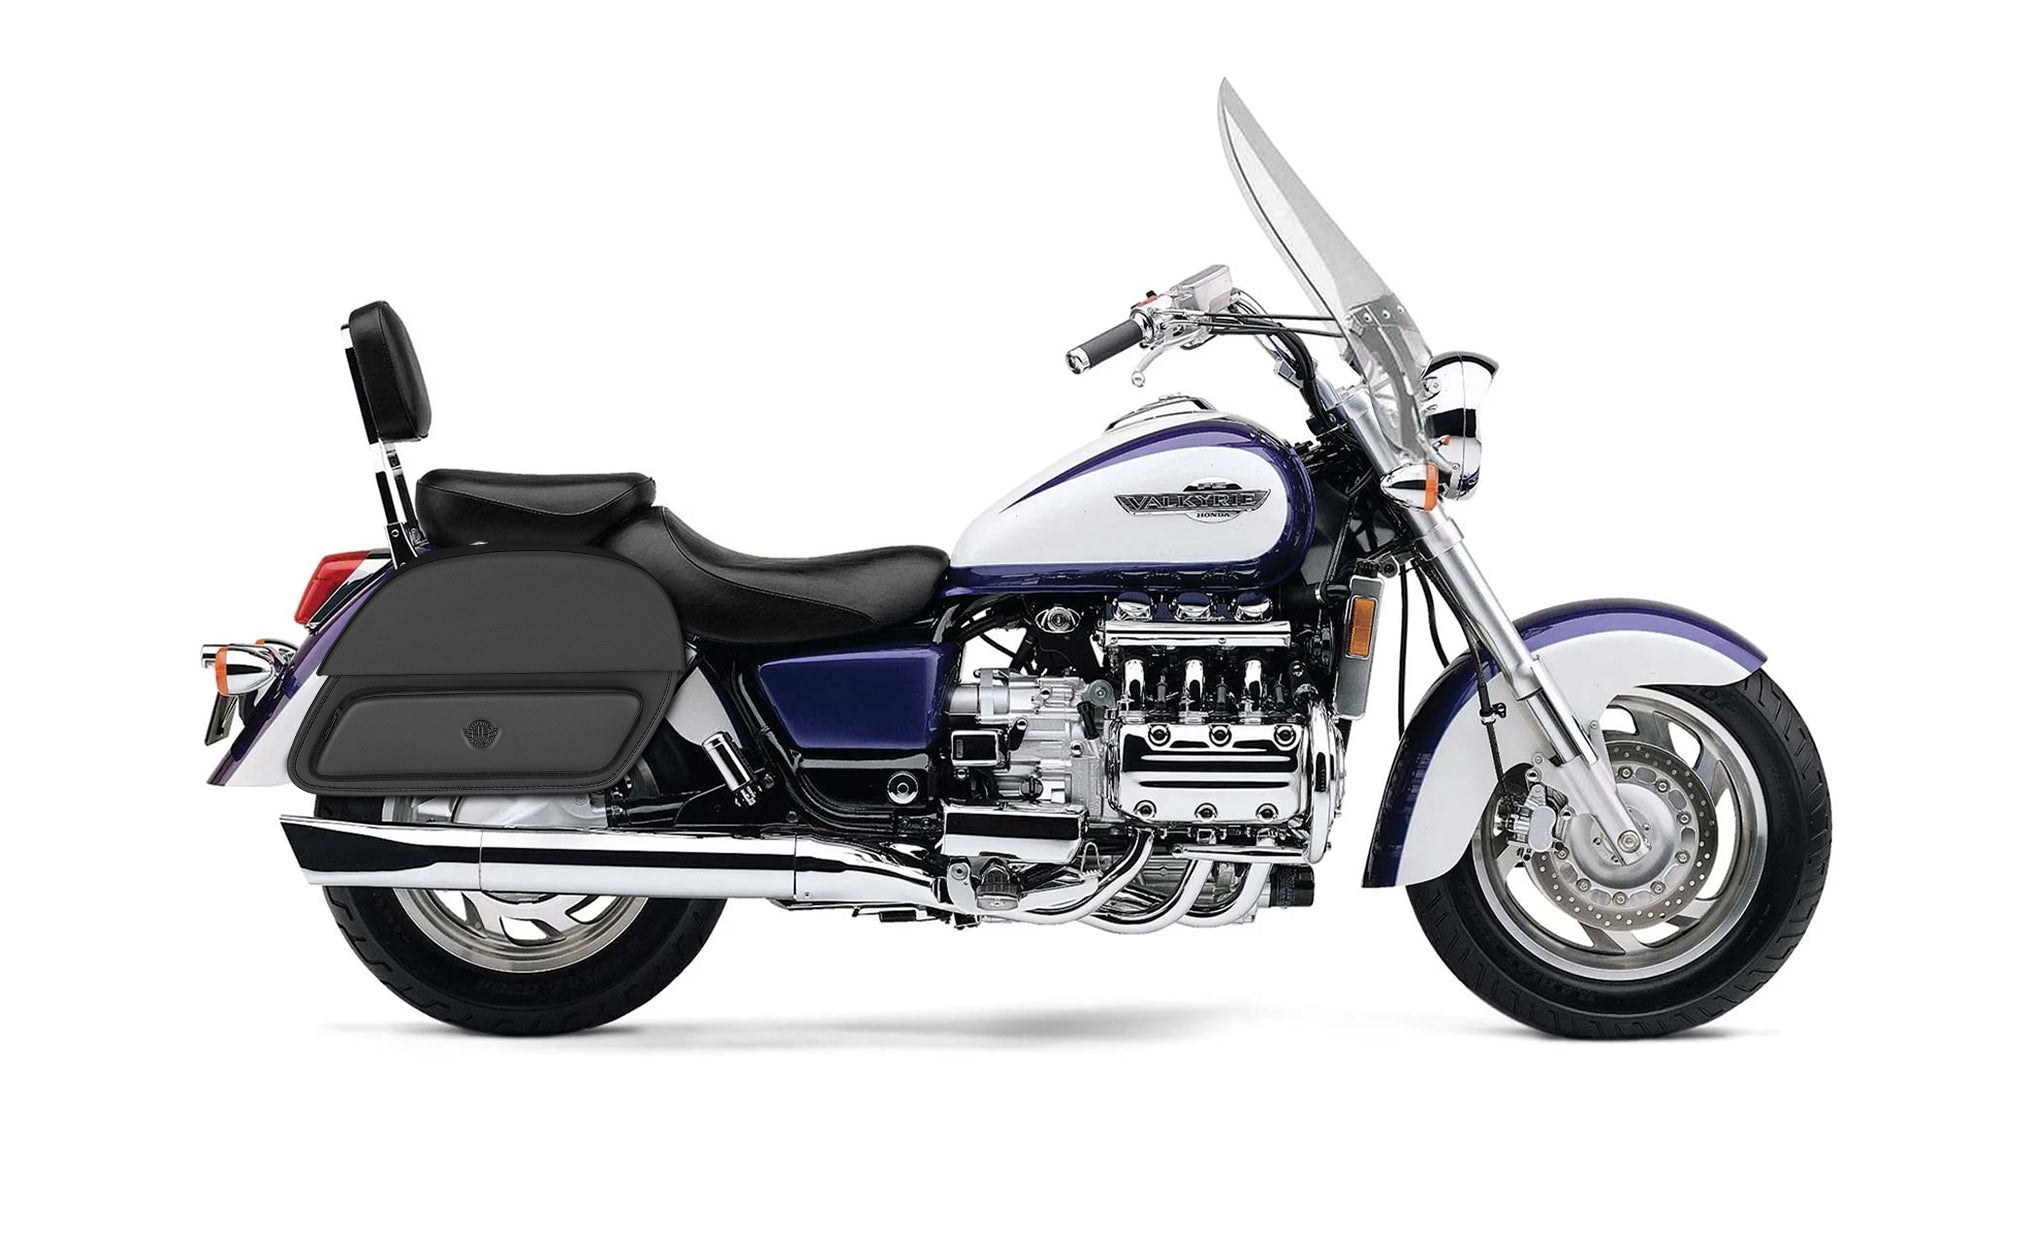 28L - Pantheon Medium Honda Valkyrie 1500 Tourer Motorcycle Saddlebags on Bike Photo @expand